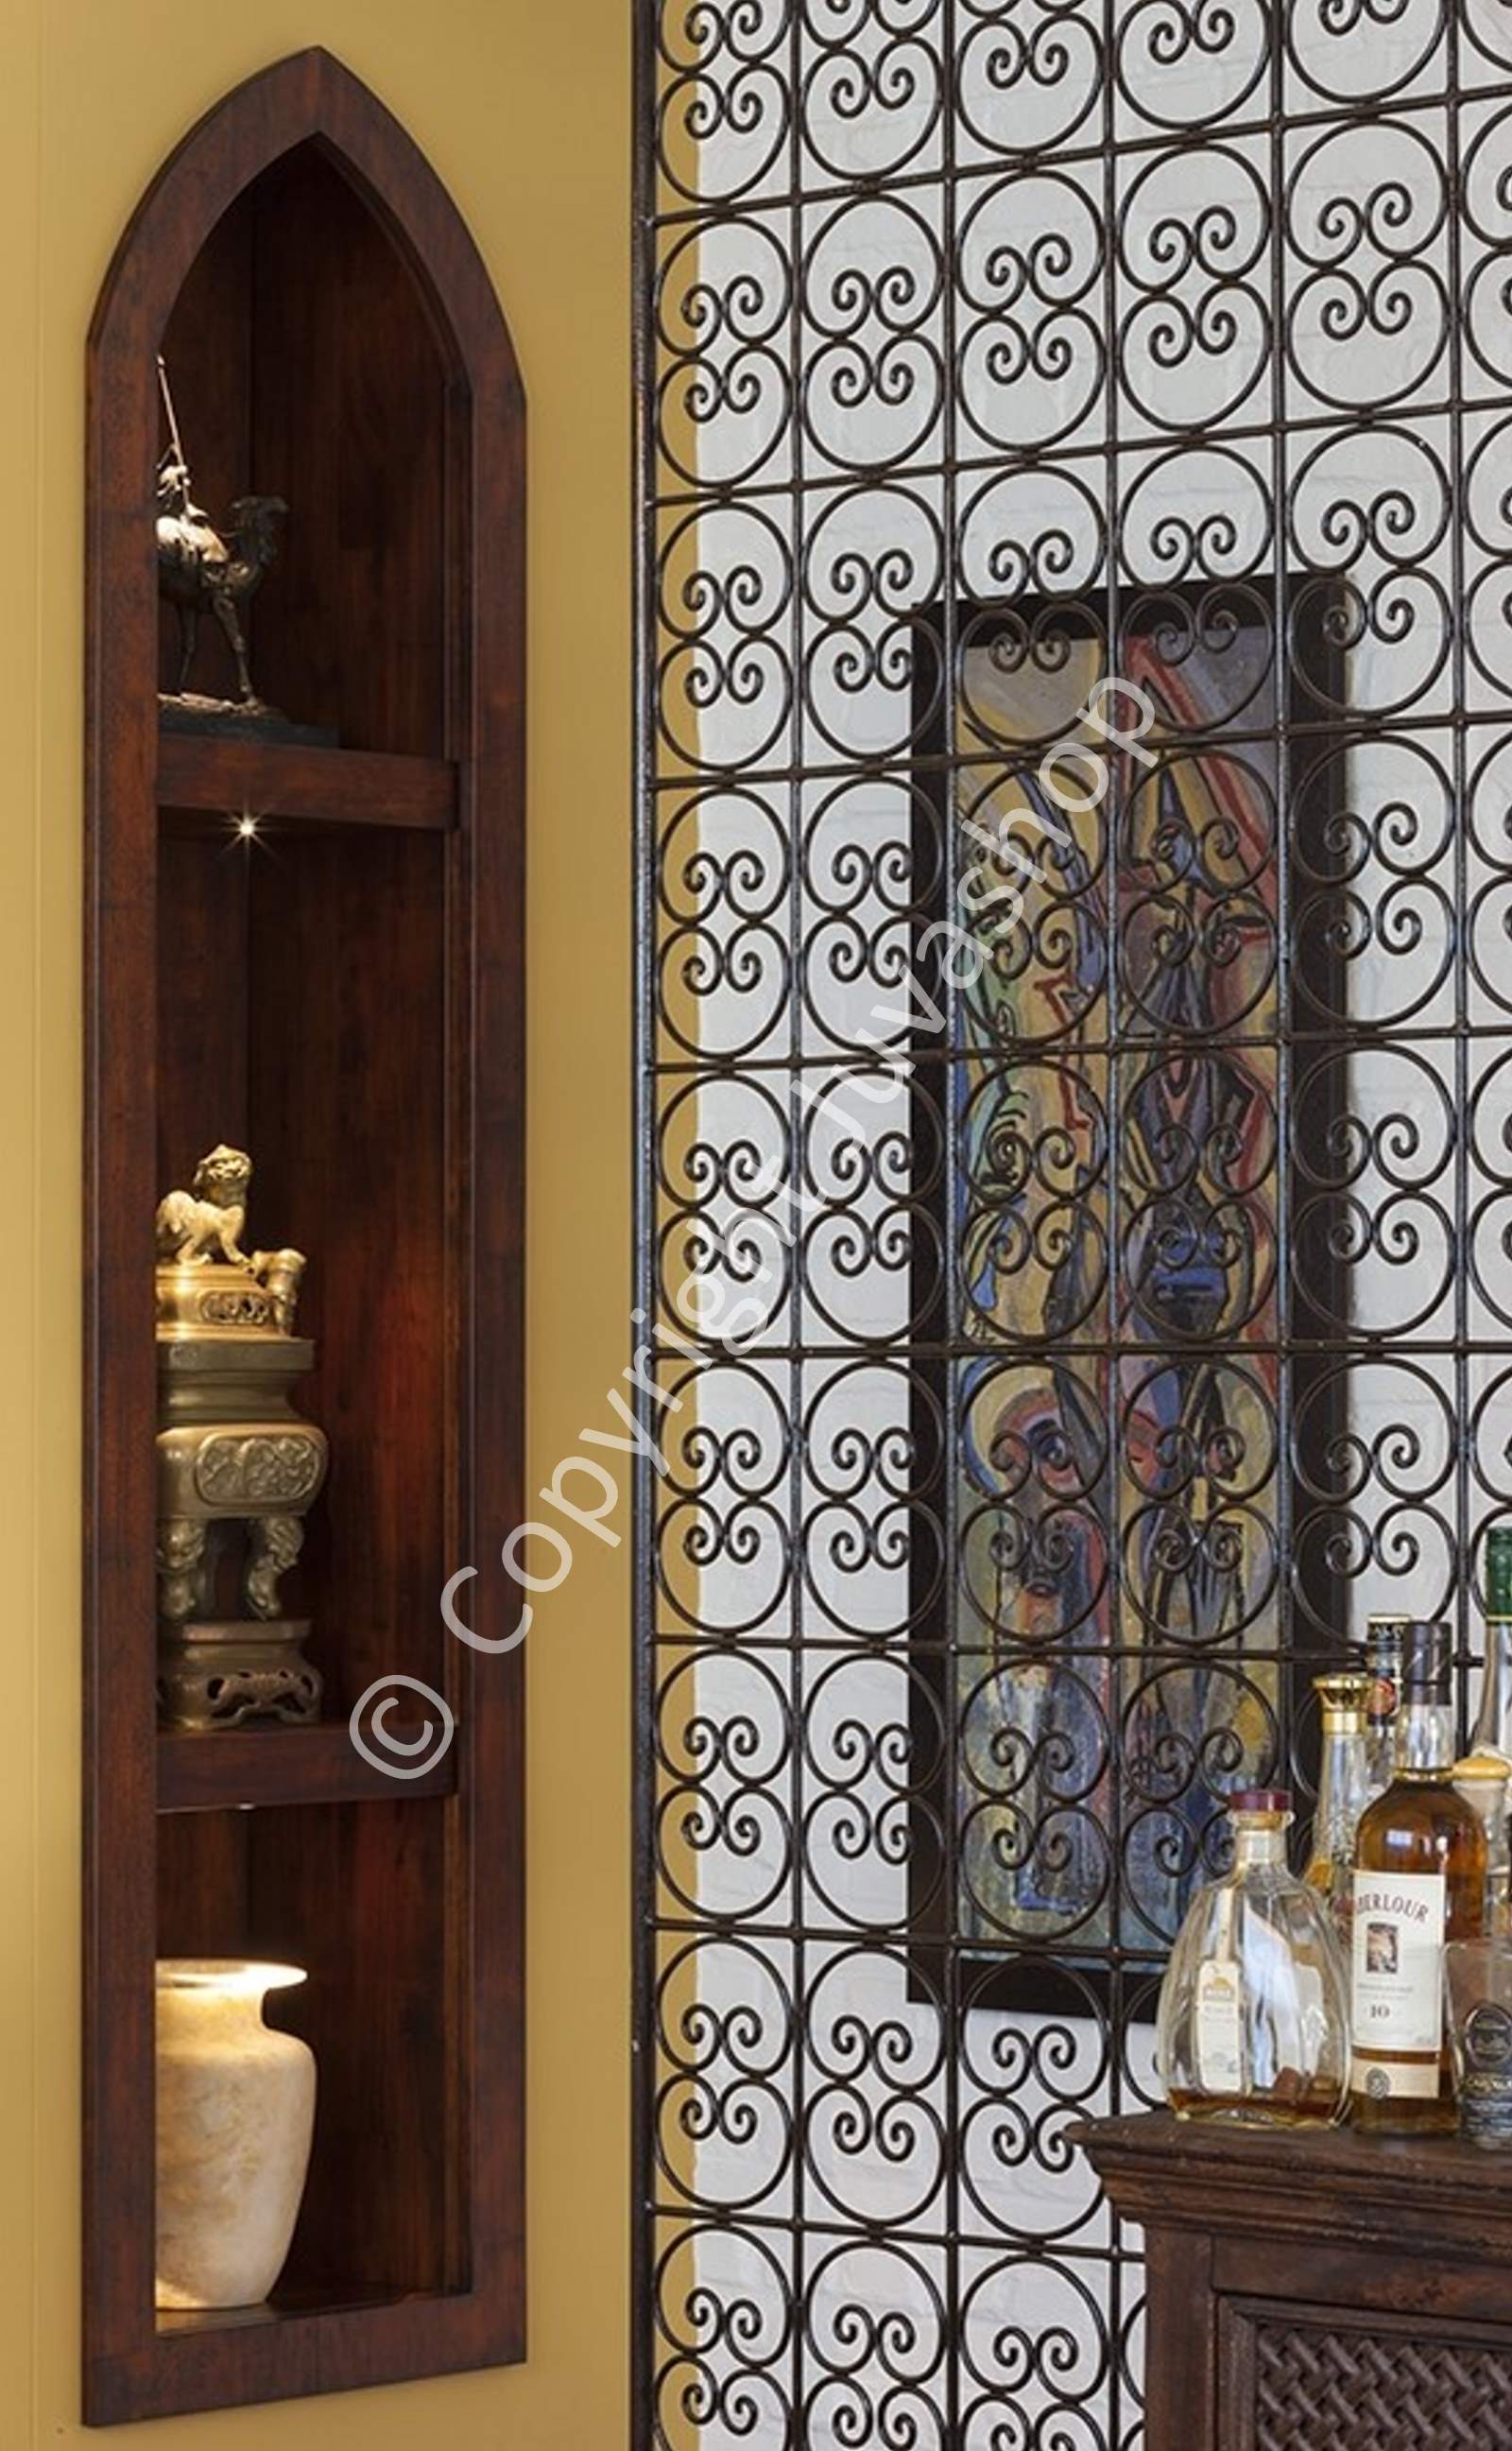 grille-marocaine-decorative-interieur-fer-forge 2